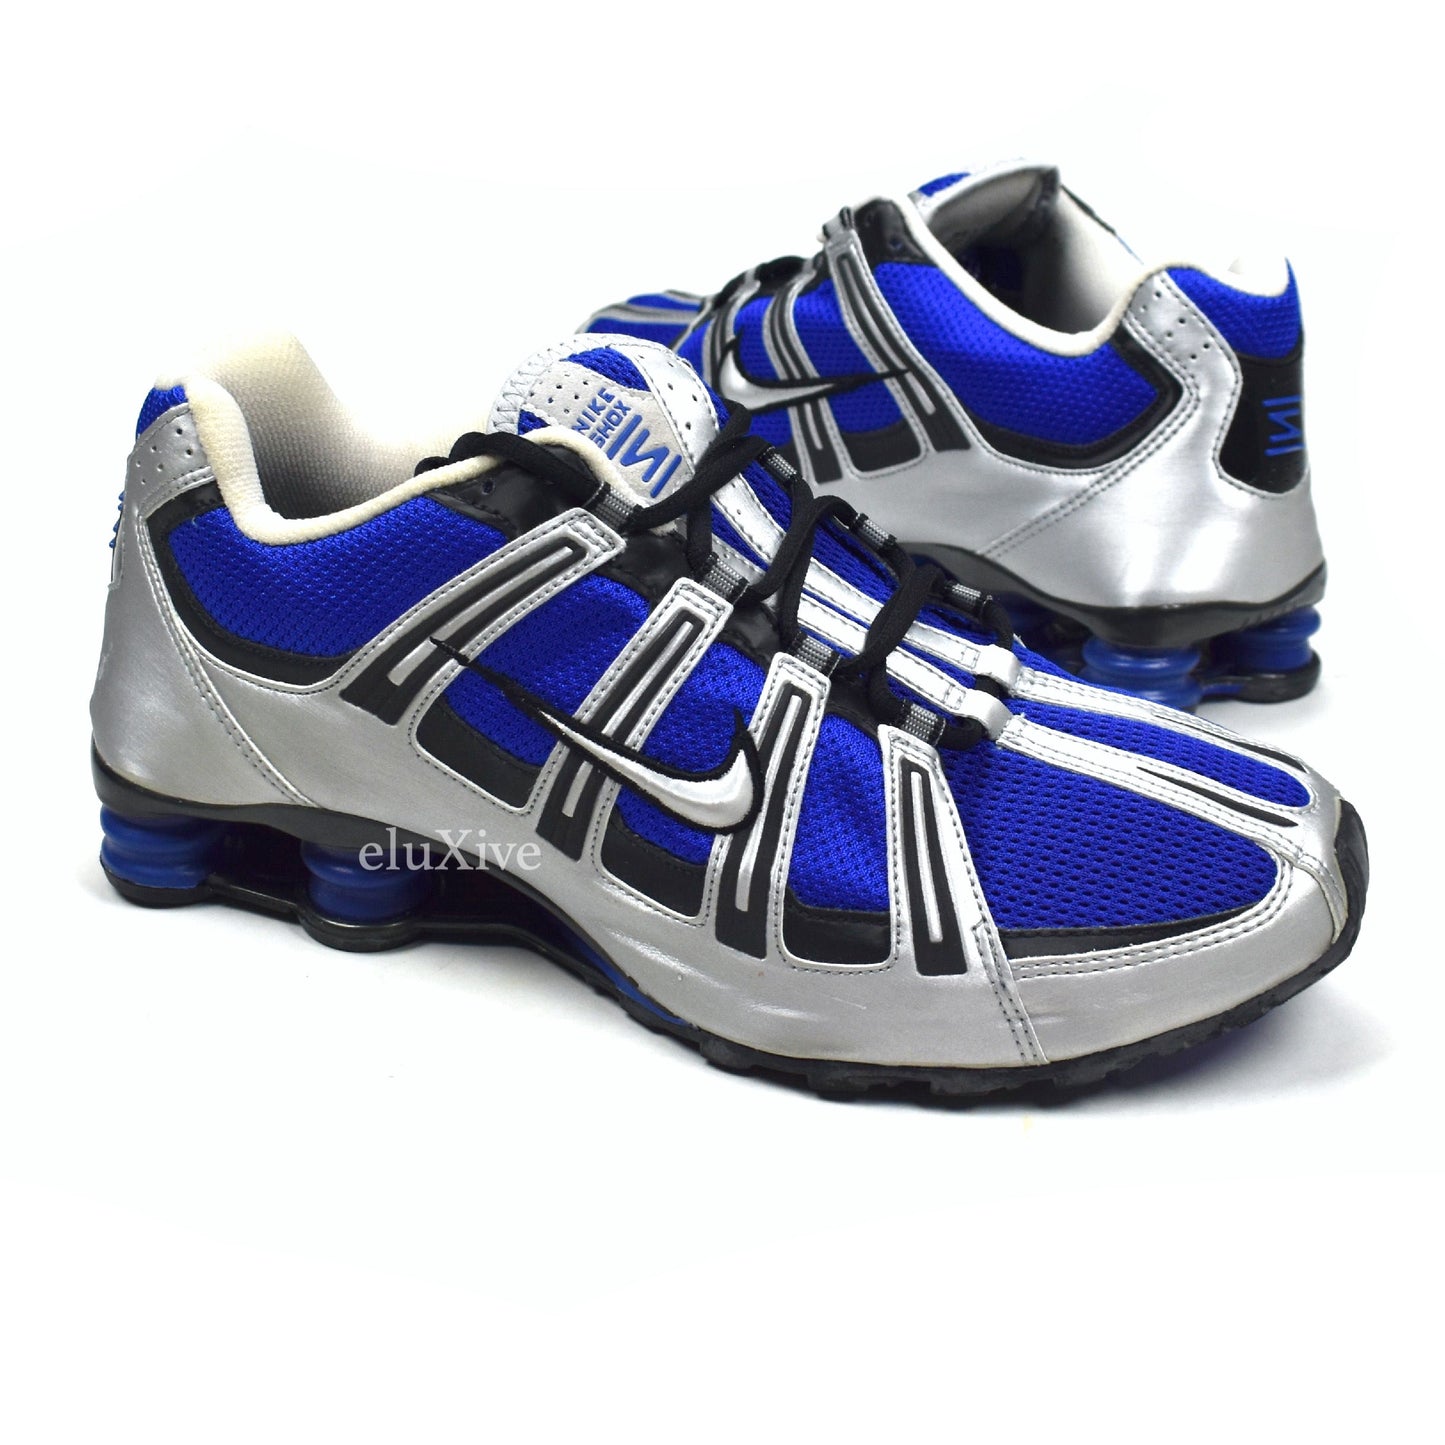 Nike - Shox Turbo Varsity Royal Blue / Metallic Silver (2004)